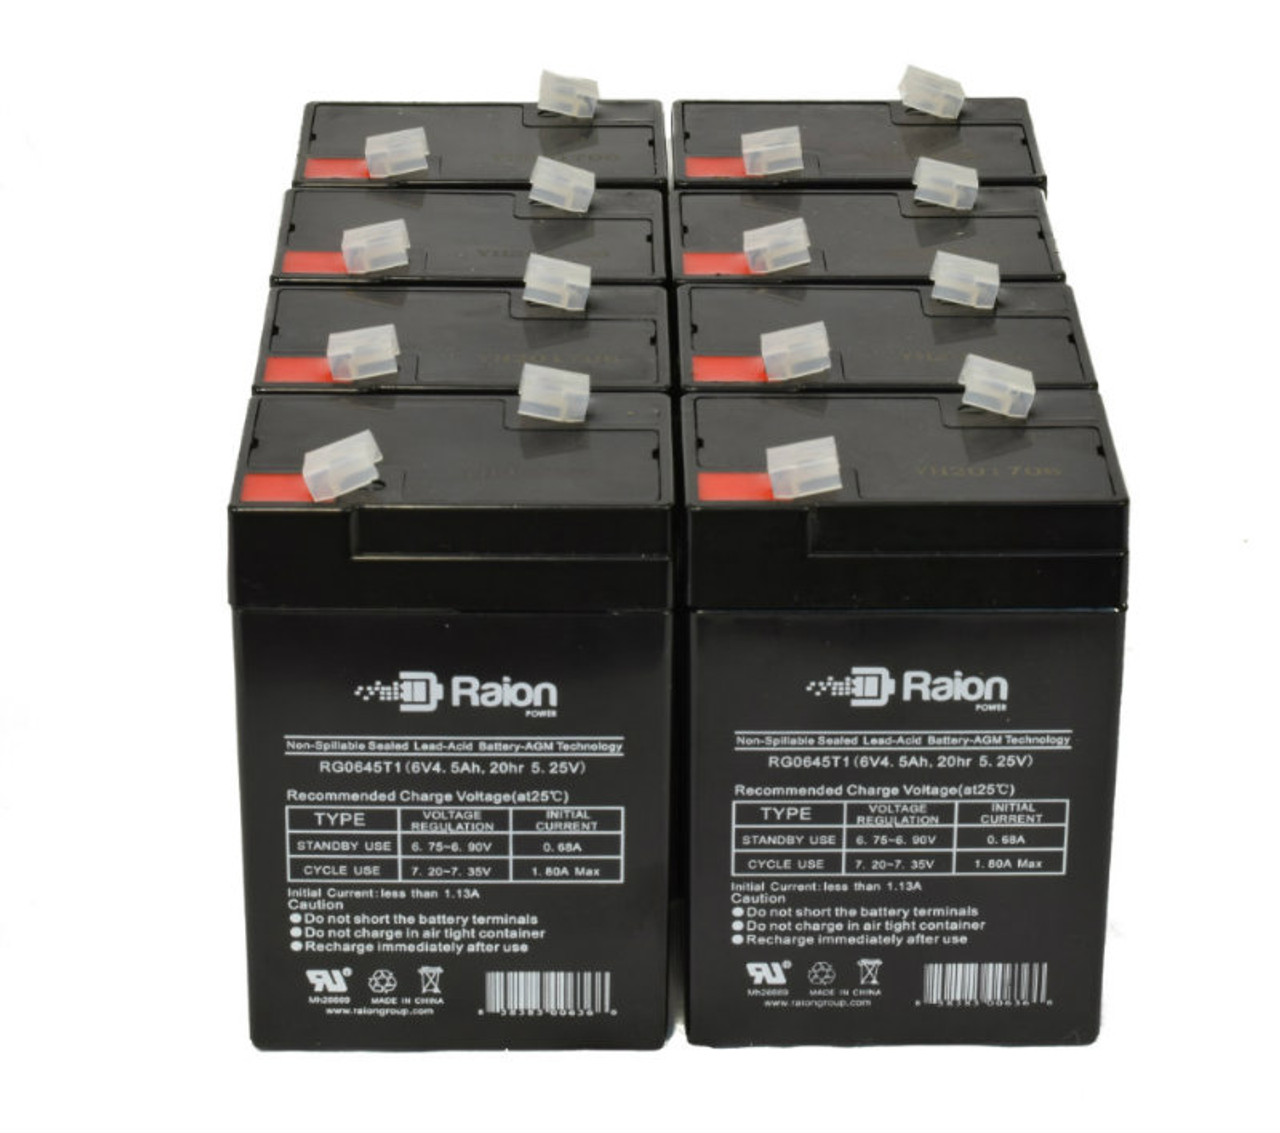 Raion Power 6 Volt 4.5Ah RG0645T1 Replacement Battery for RIMA UN6-6 - 8 Pack